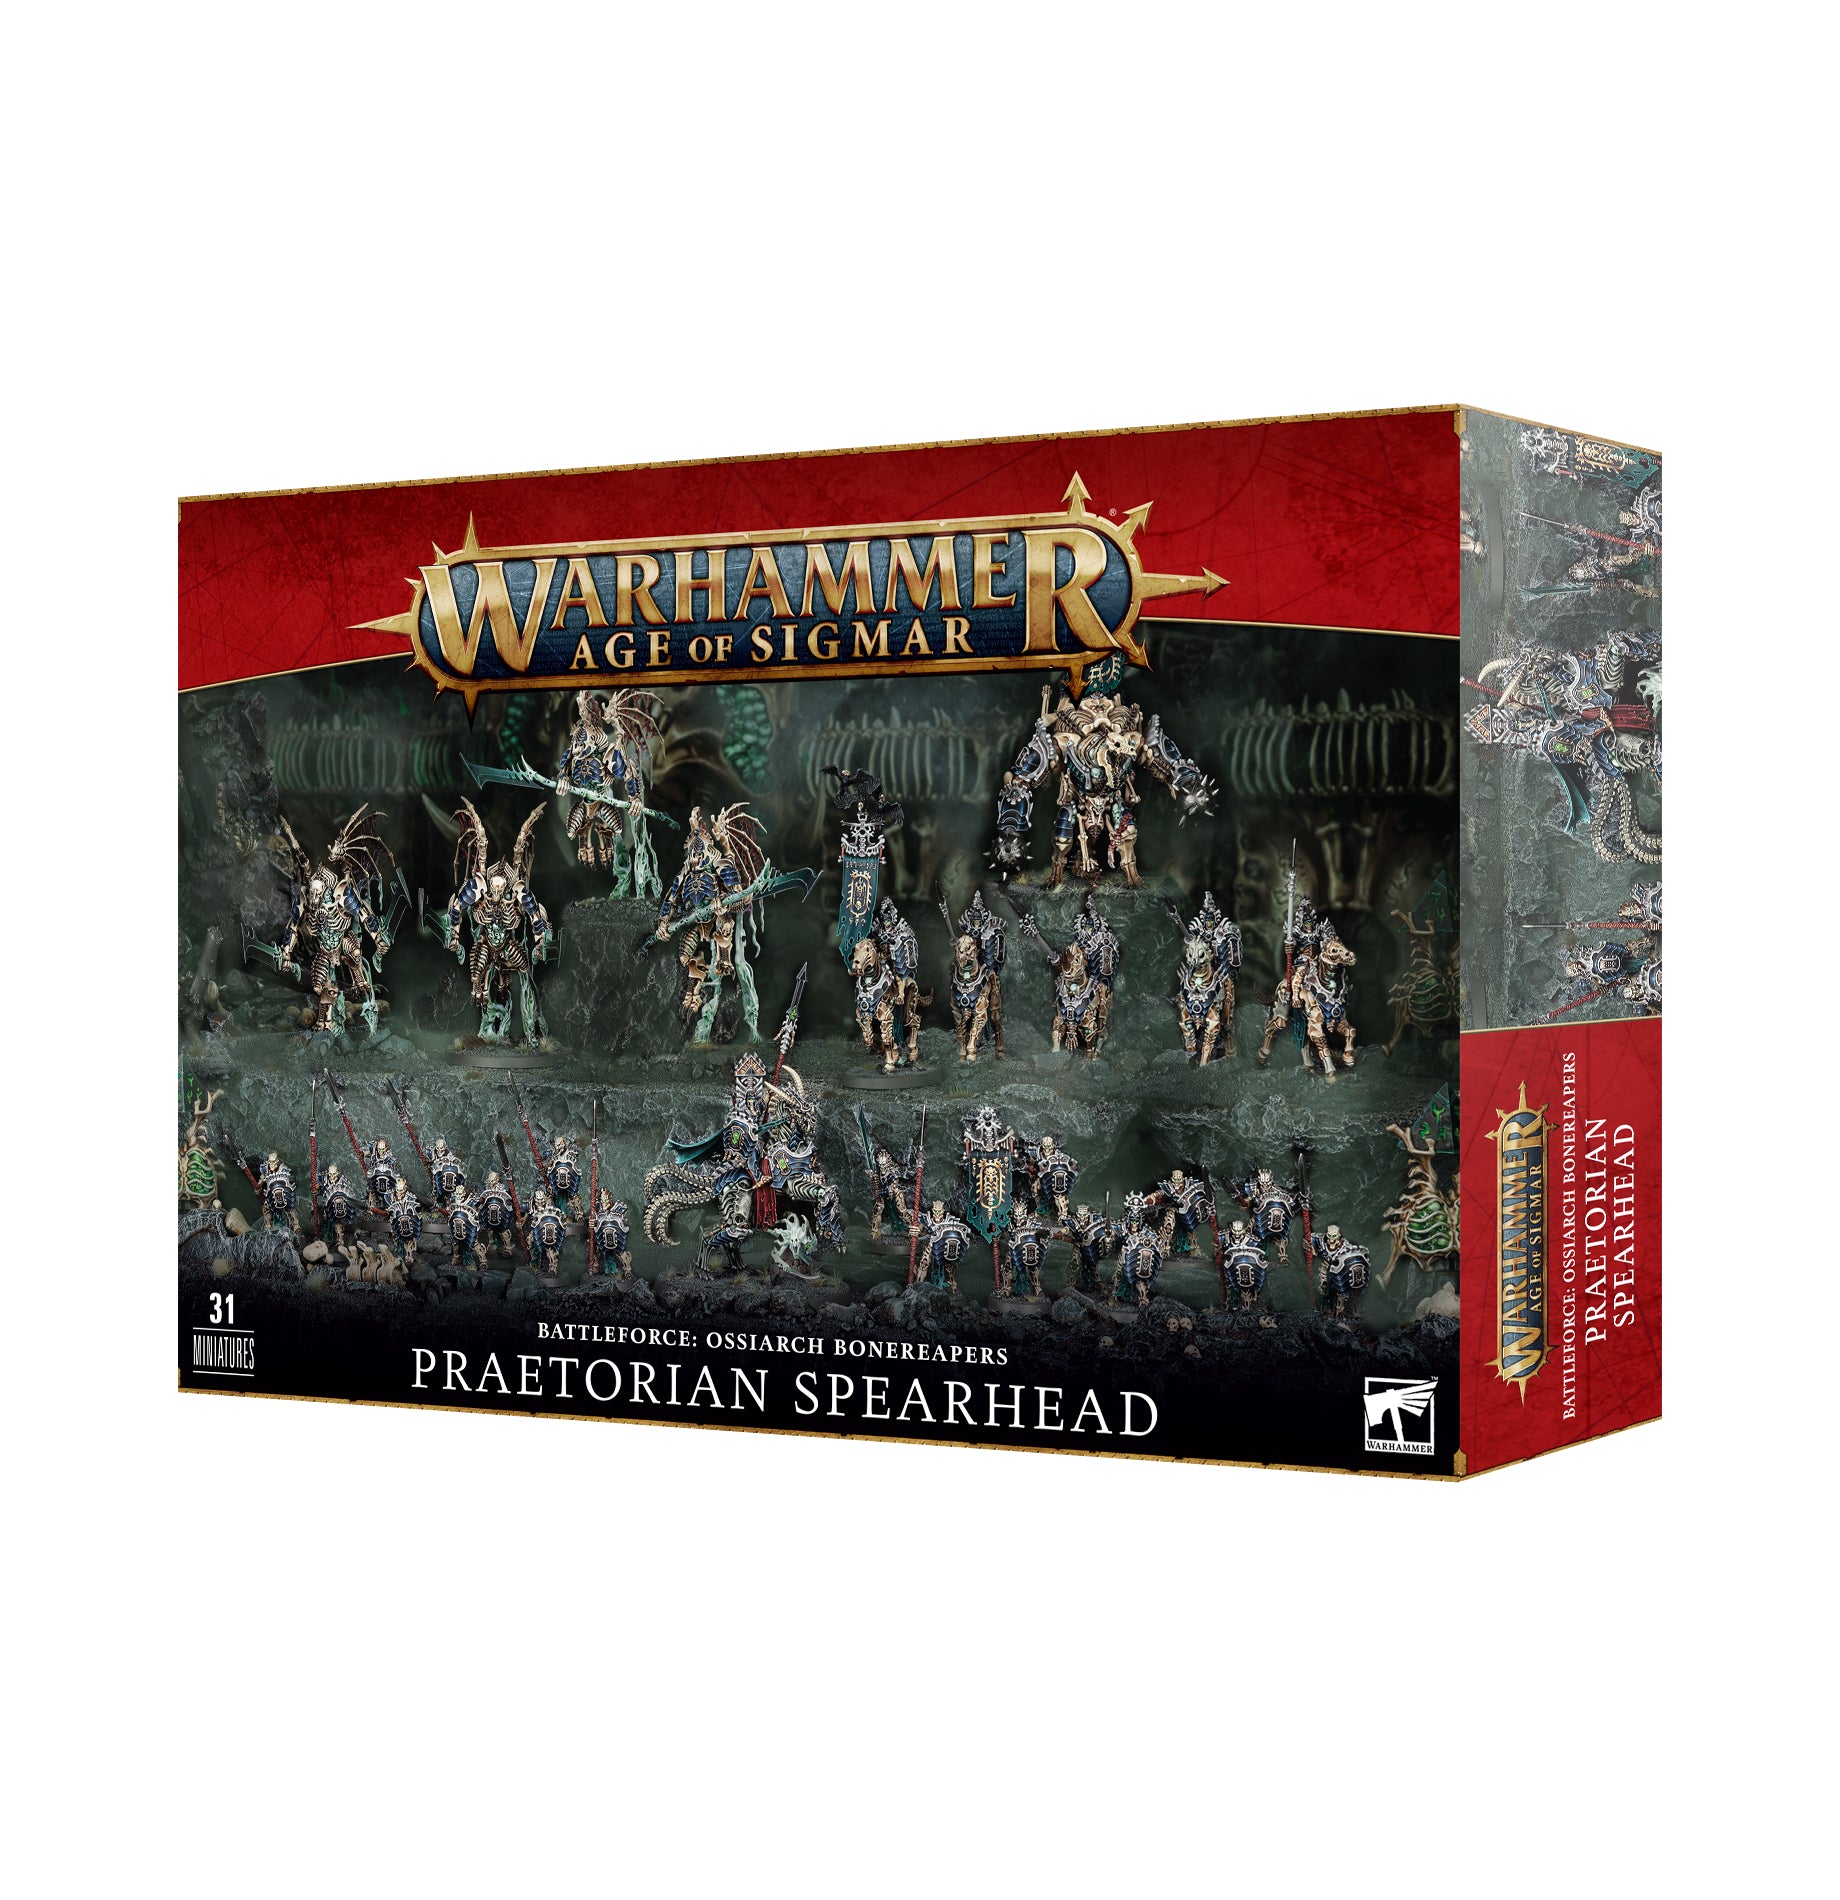 Battleforce: Ossiarch Bonereapers - Praetorian Spearhead | HFX Games